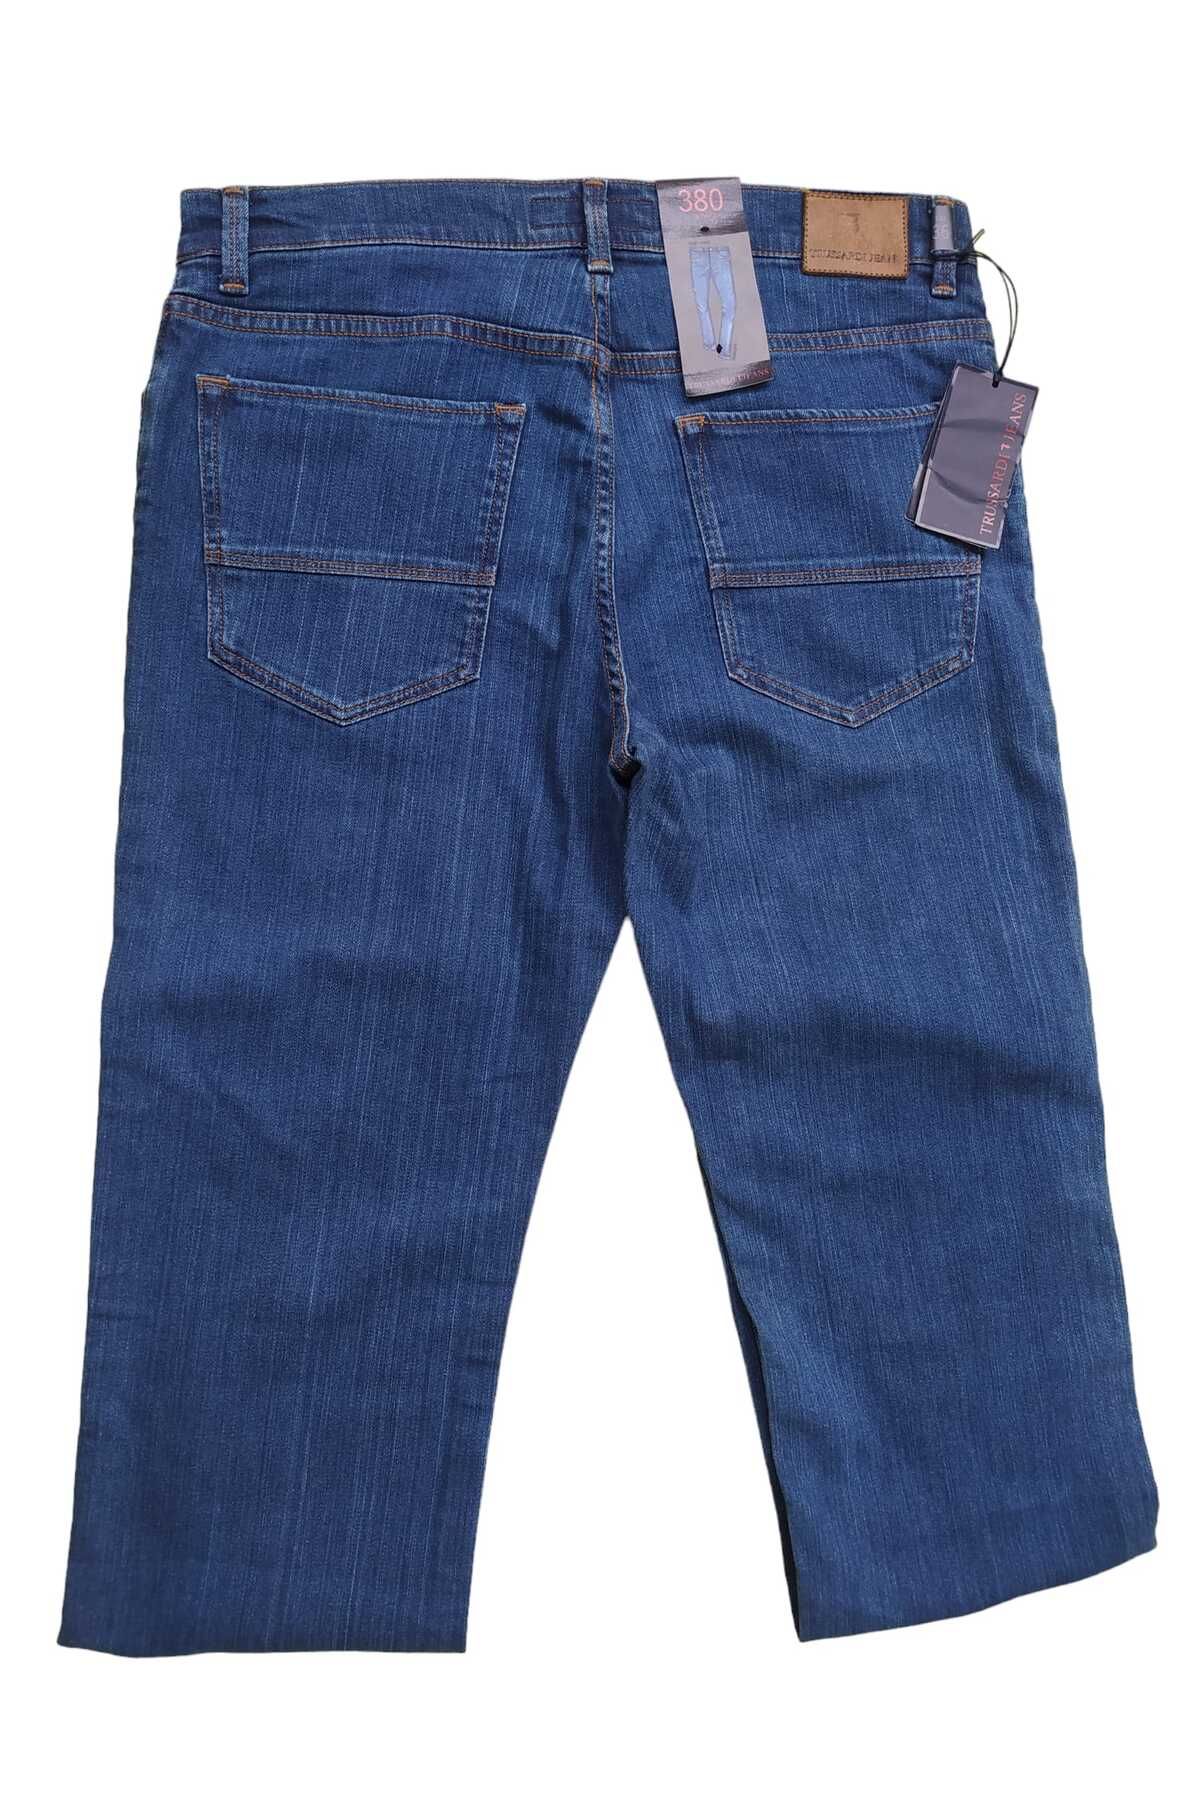 Trussardi Jeans 380